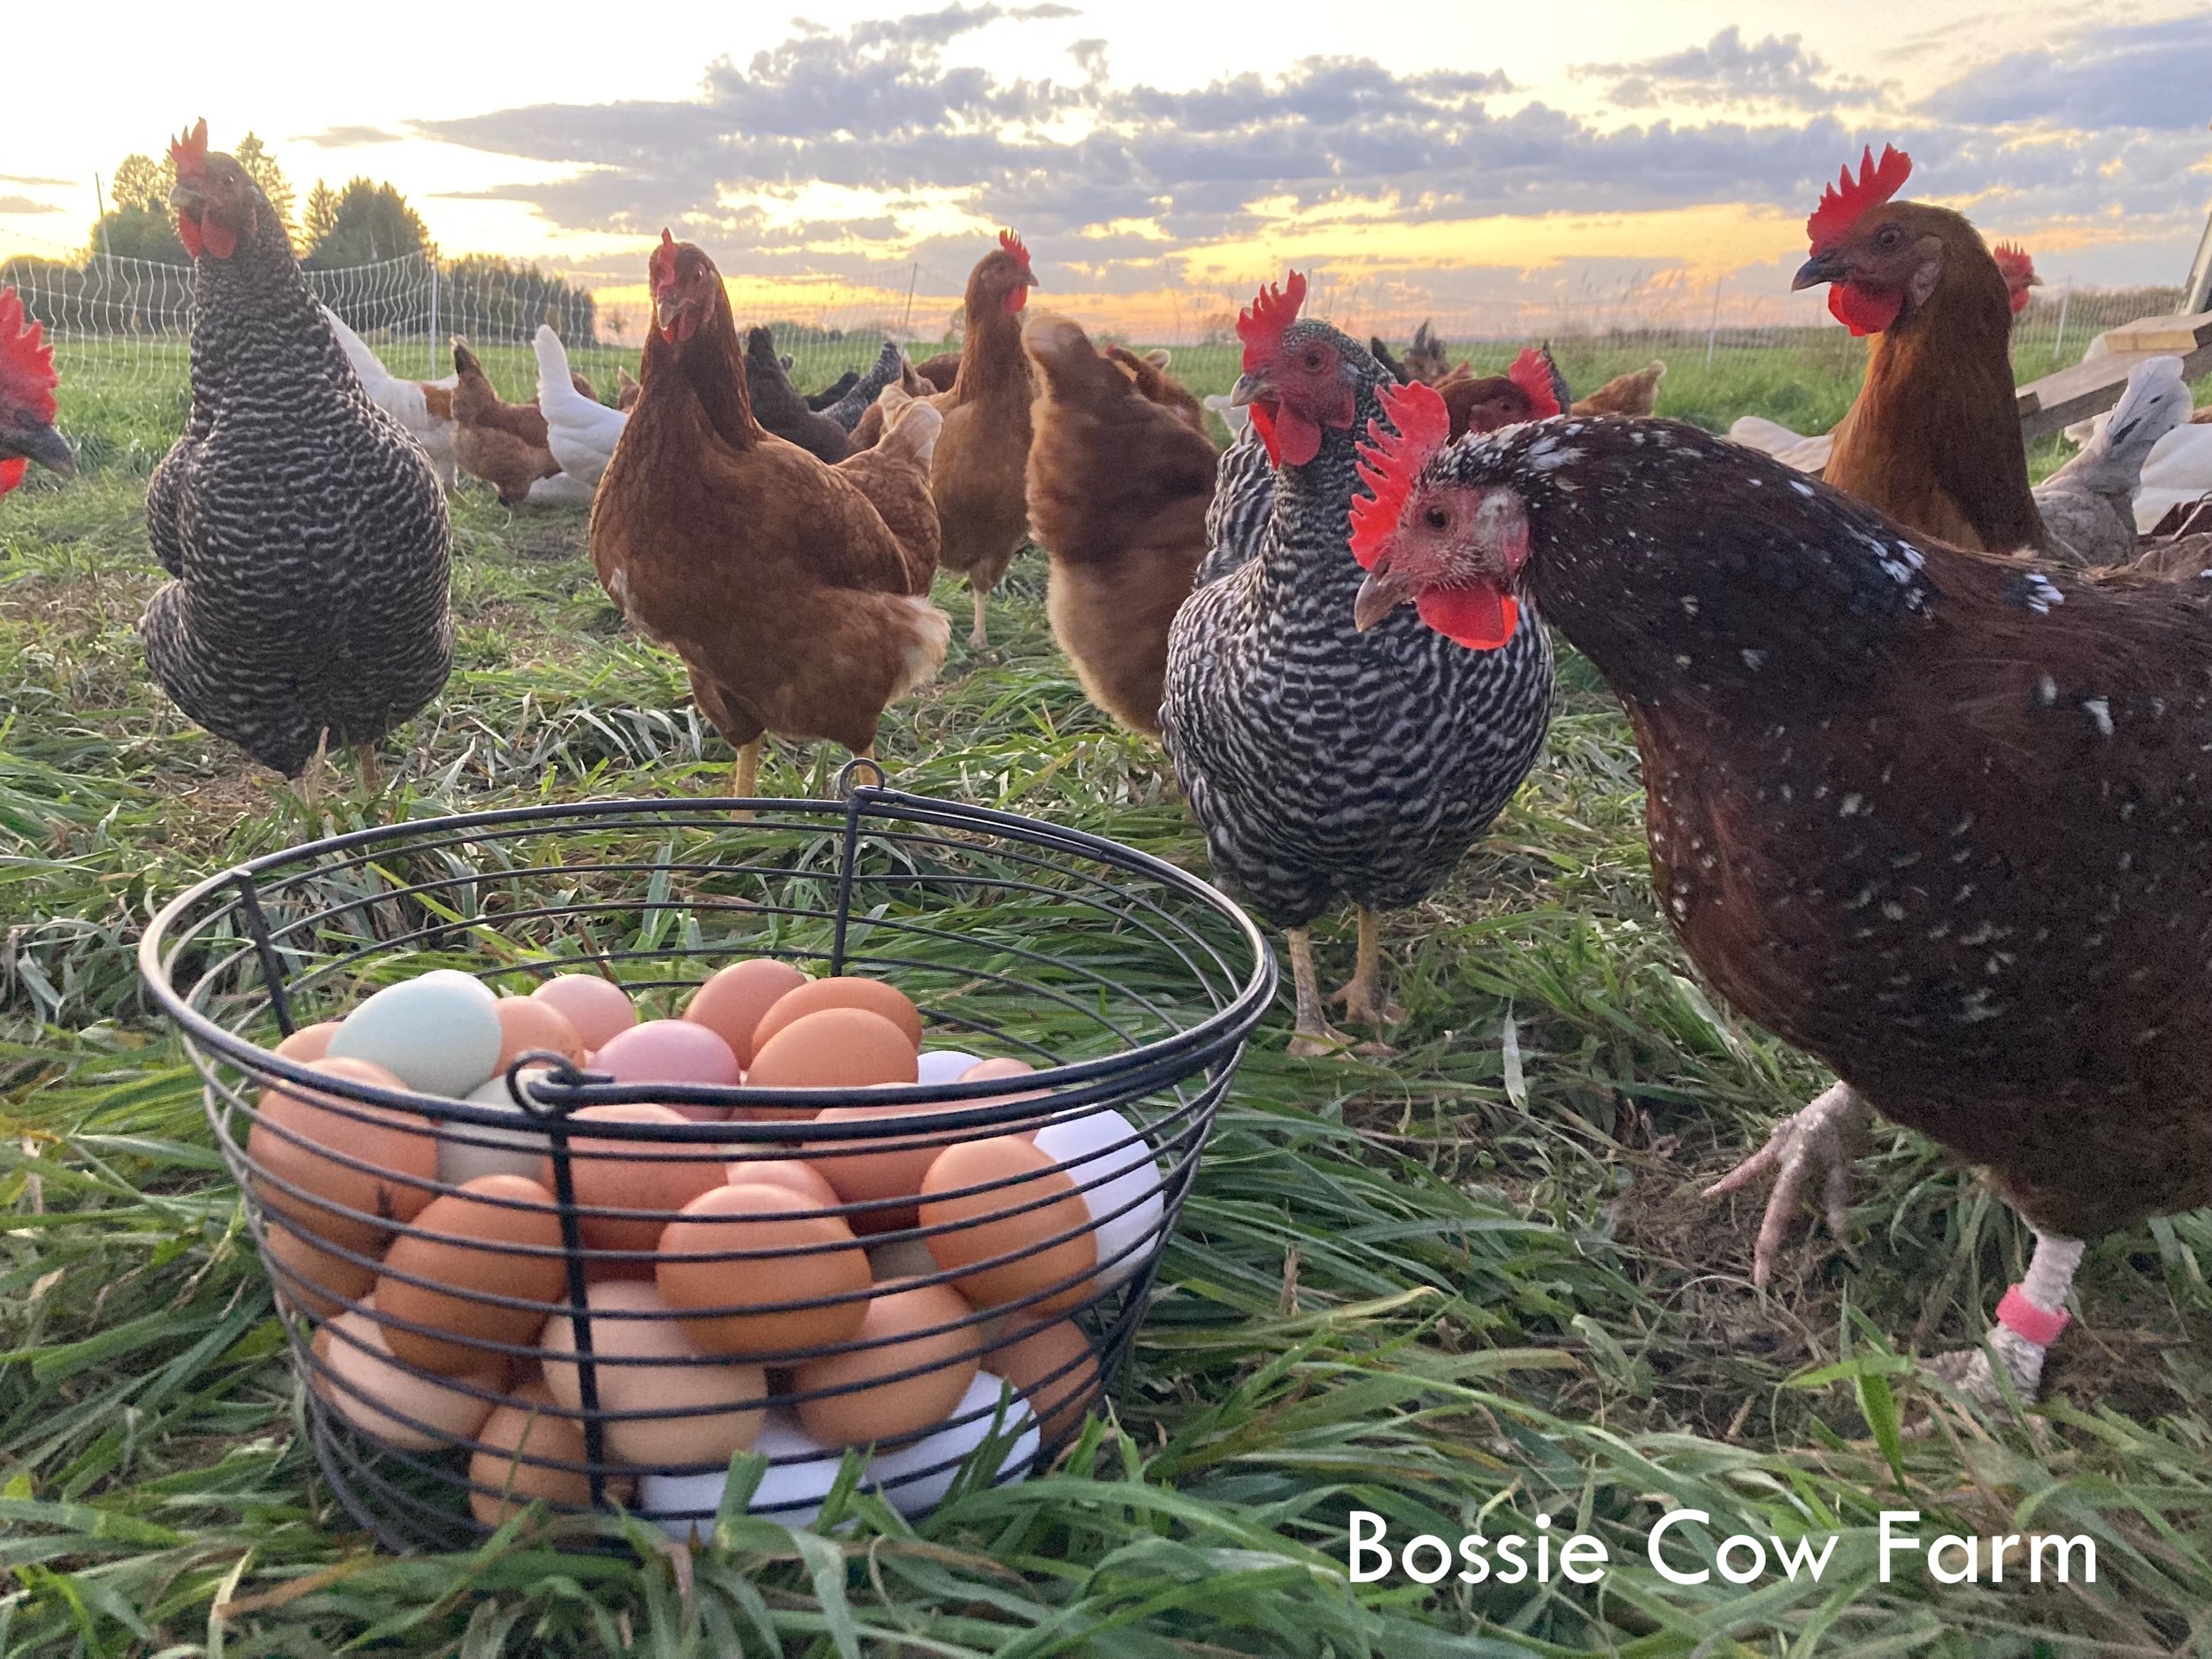 Chickens on pasture Bossie Cow Farm 2021 copy.jpg